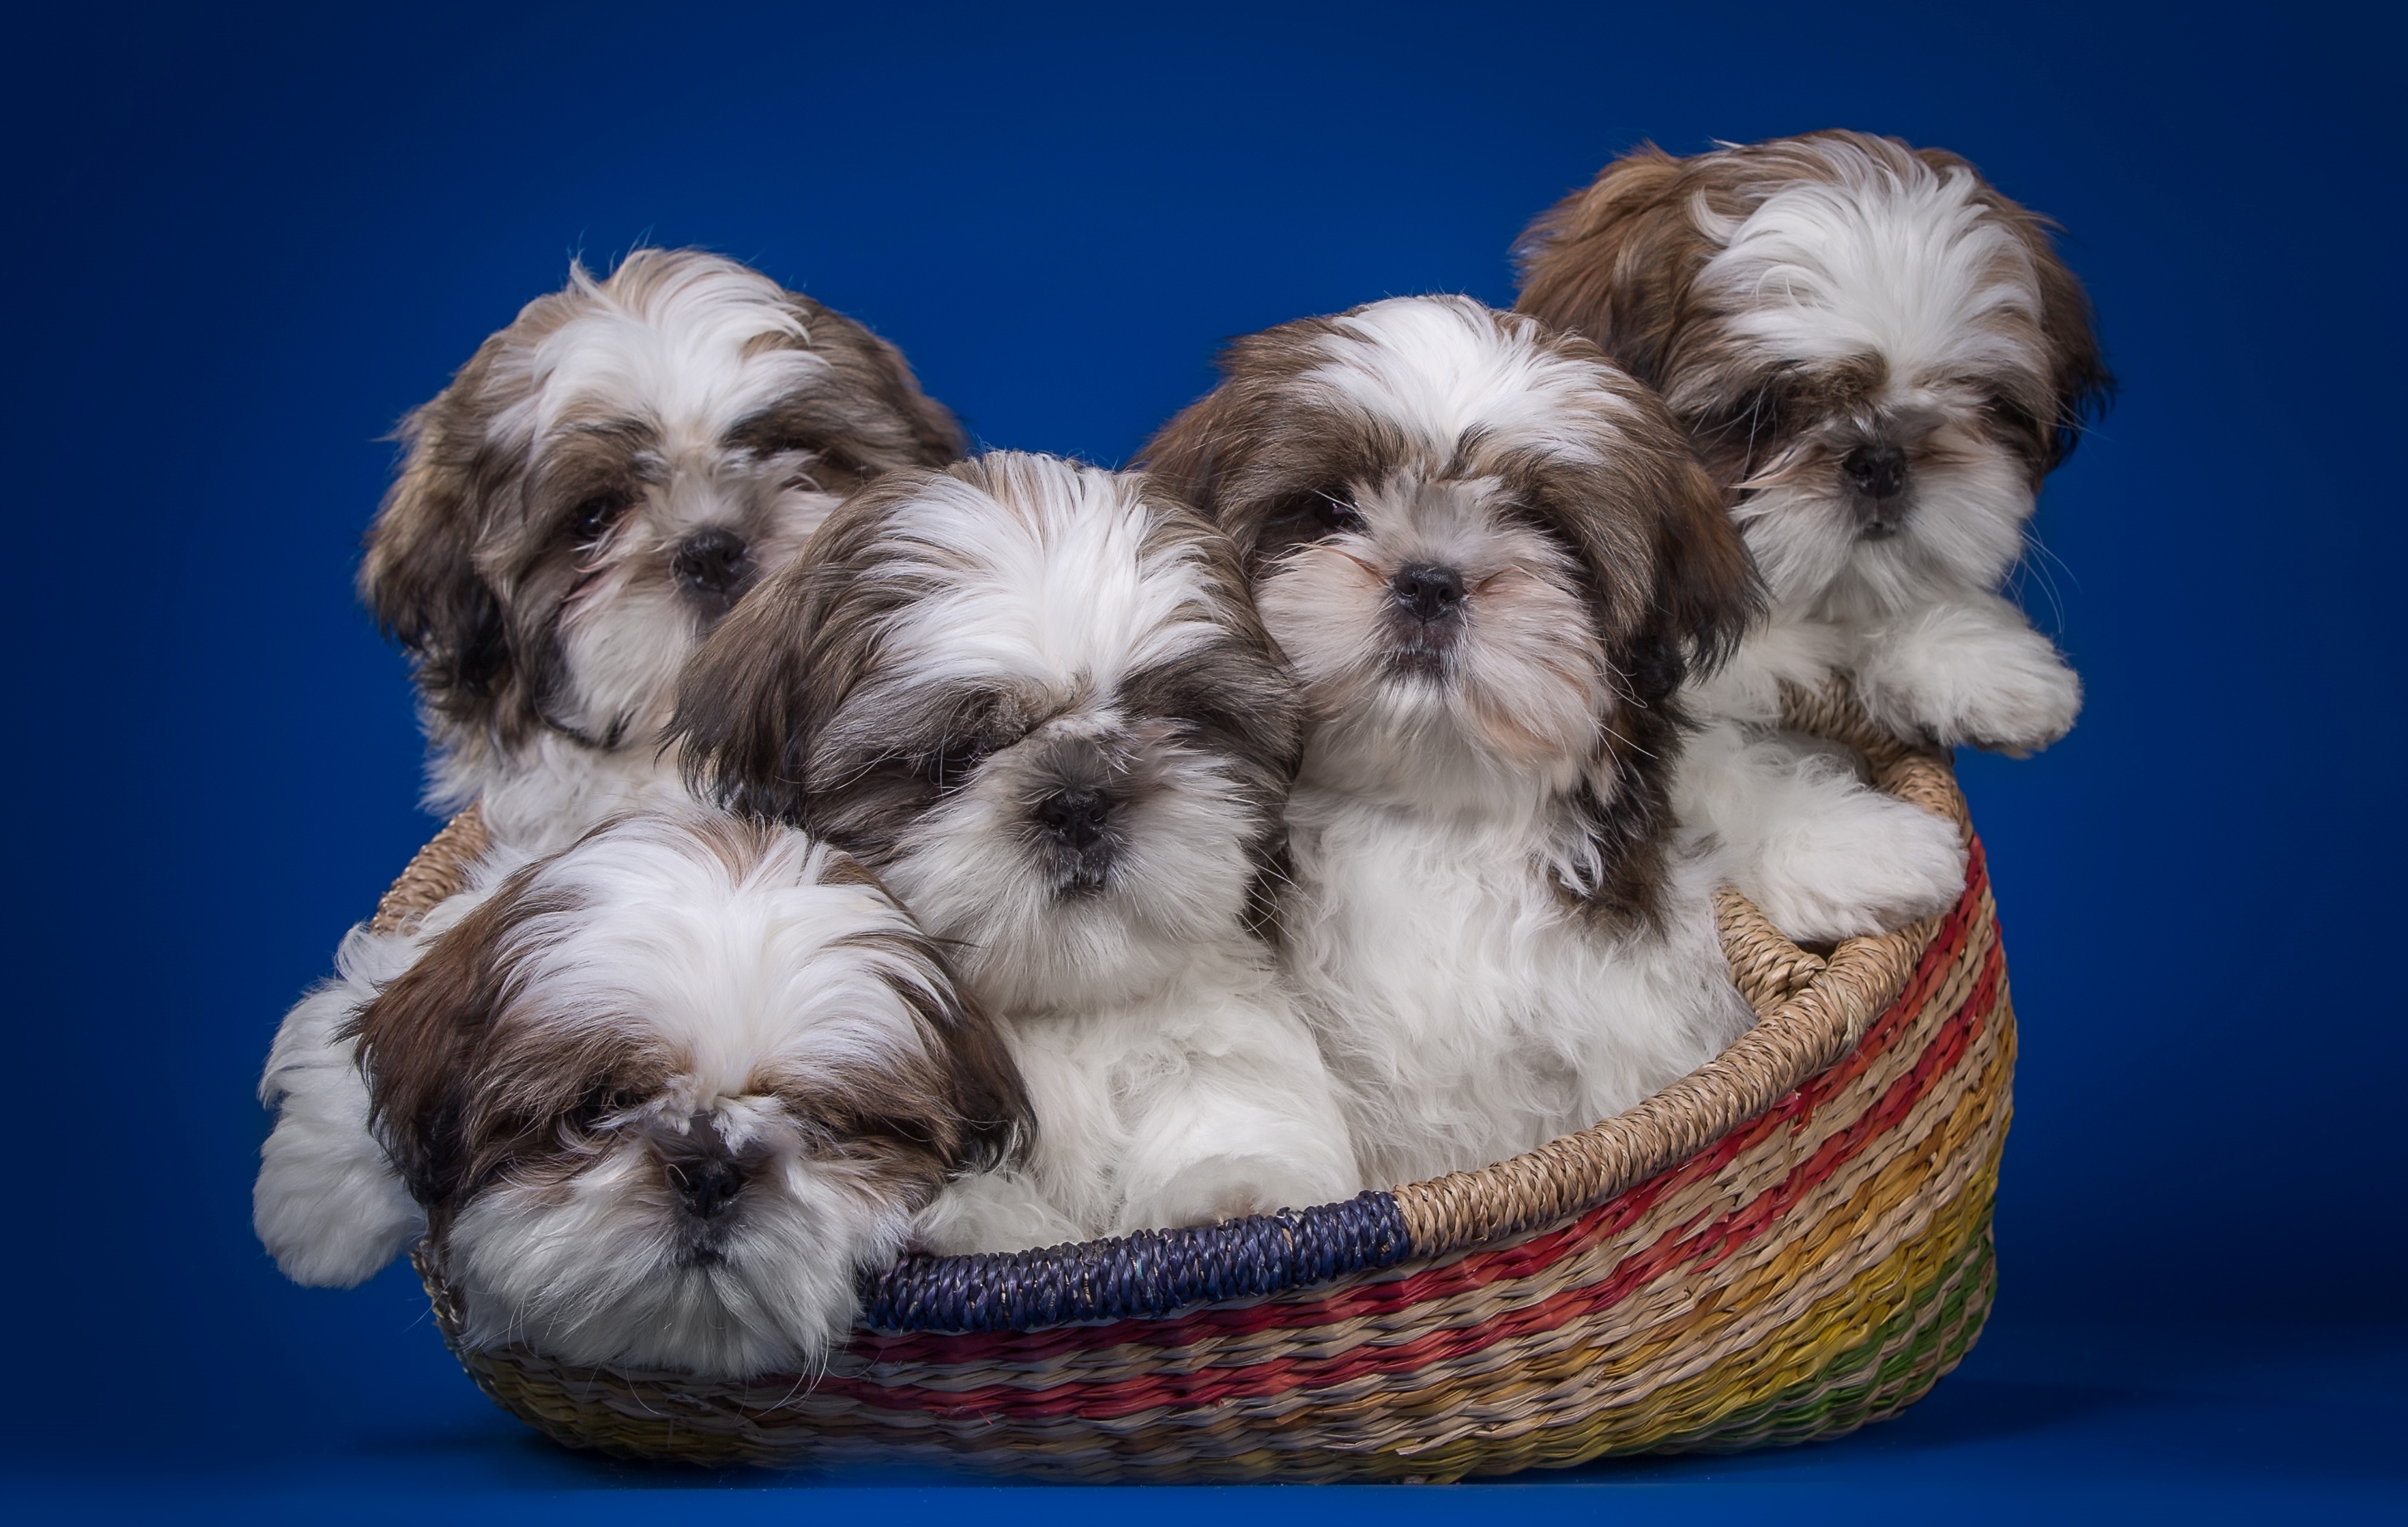 Shih Tzu puppies in a basket